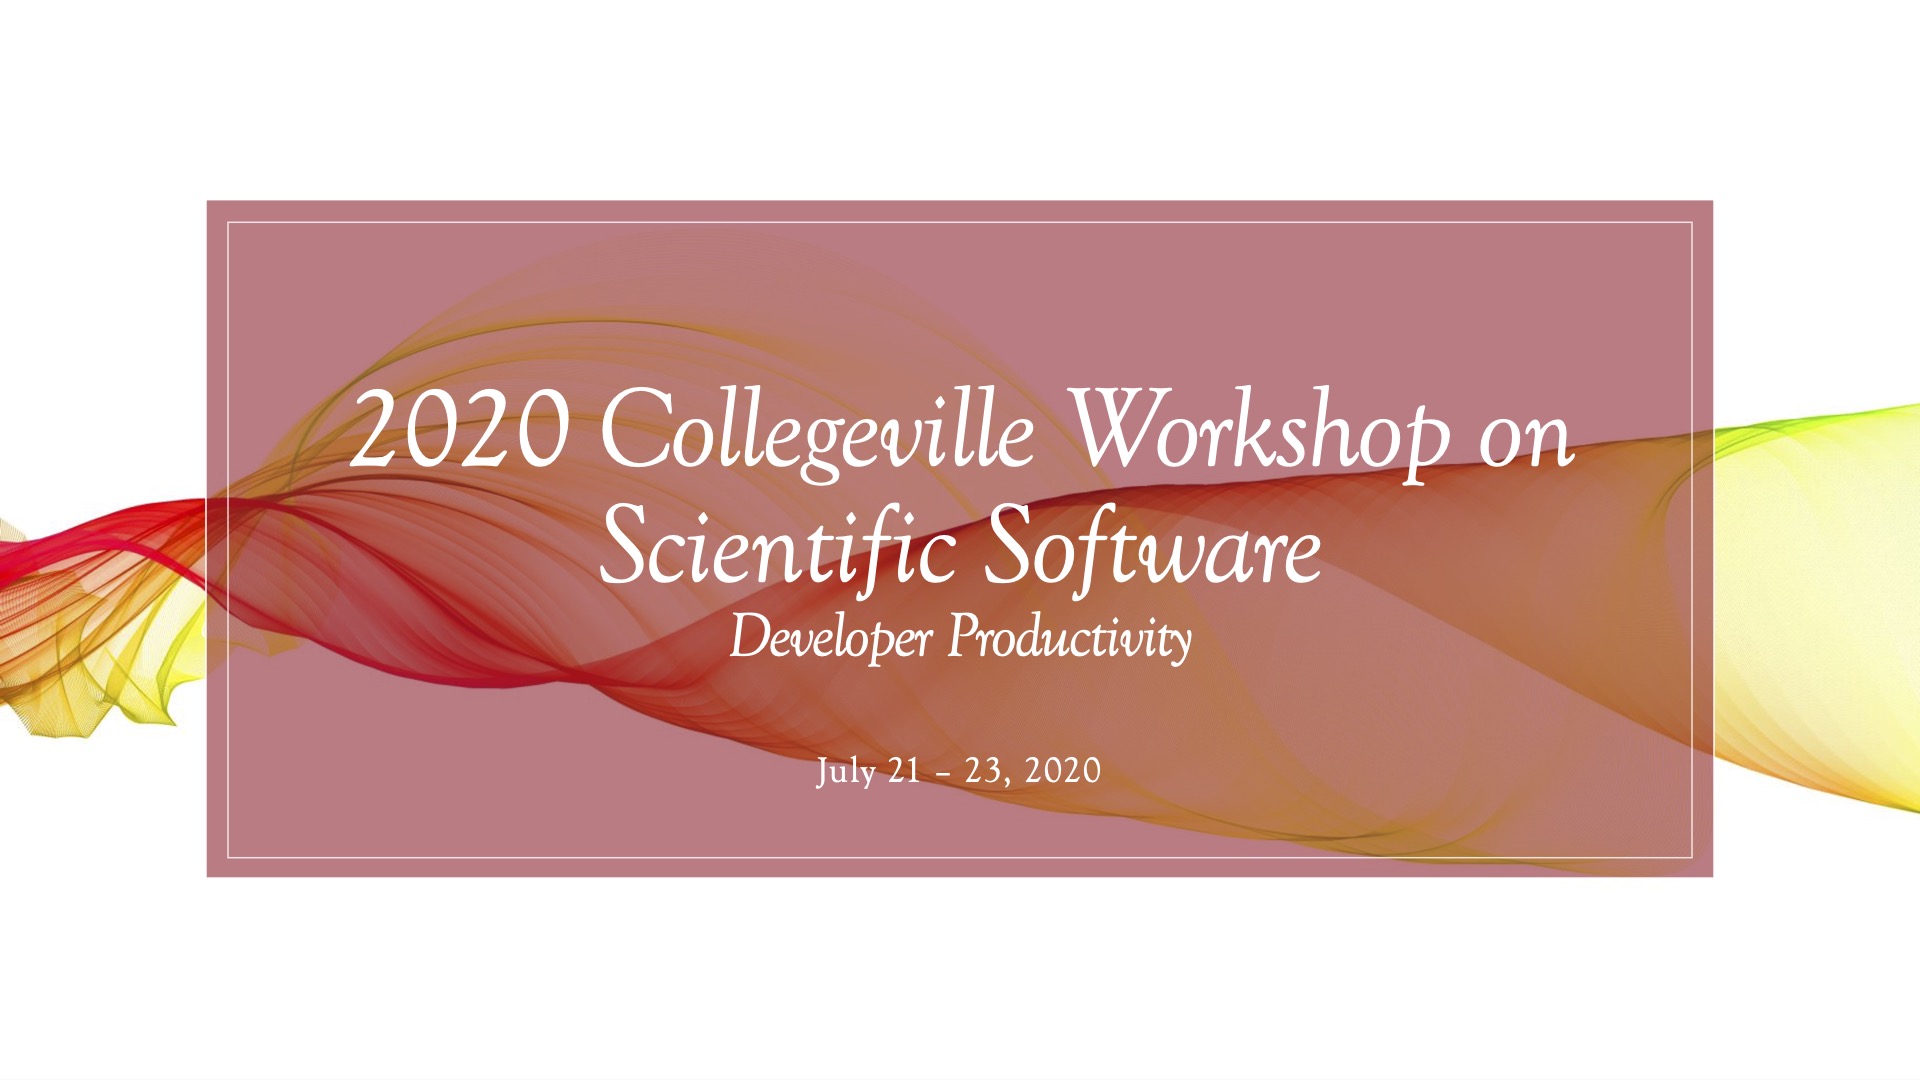 2020 Collegeville Workshop on Scientific Software - Developer Productivity